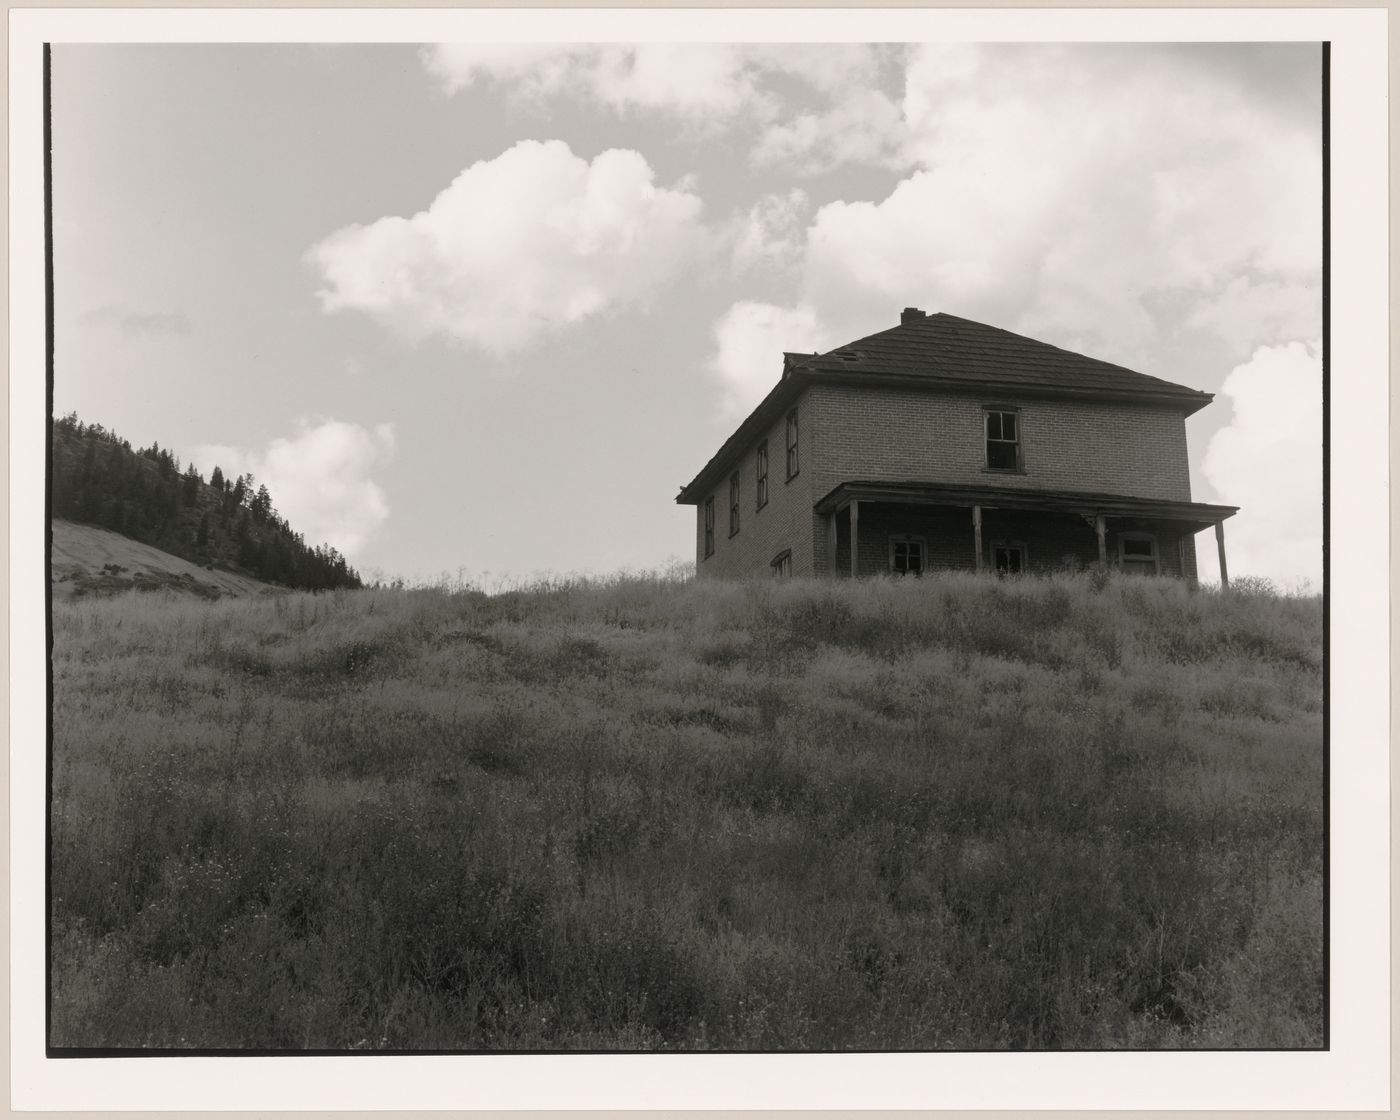 Doukhobor Communal House, Abandoned, Grand Forks, 1974